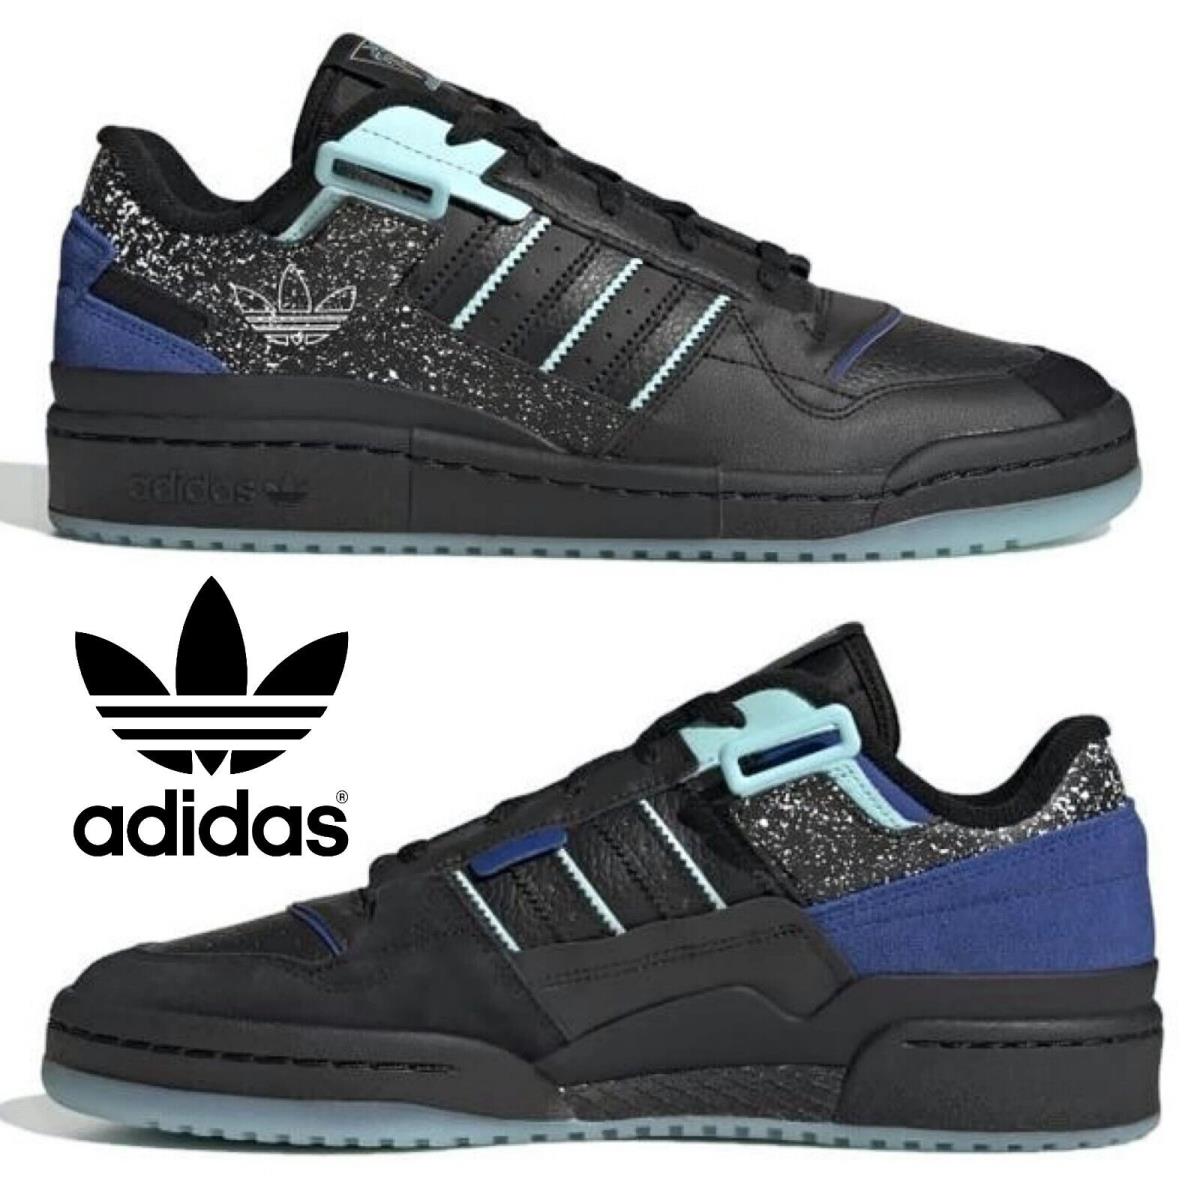 Adidas Originals Forum Exhibit Low Men`s Sneakers Comfort Casual Shoes Black